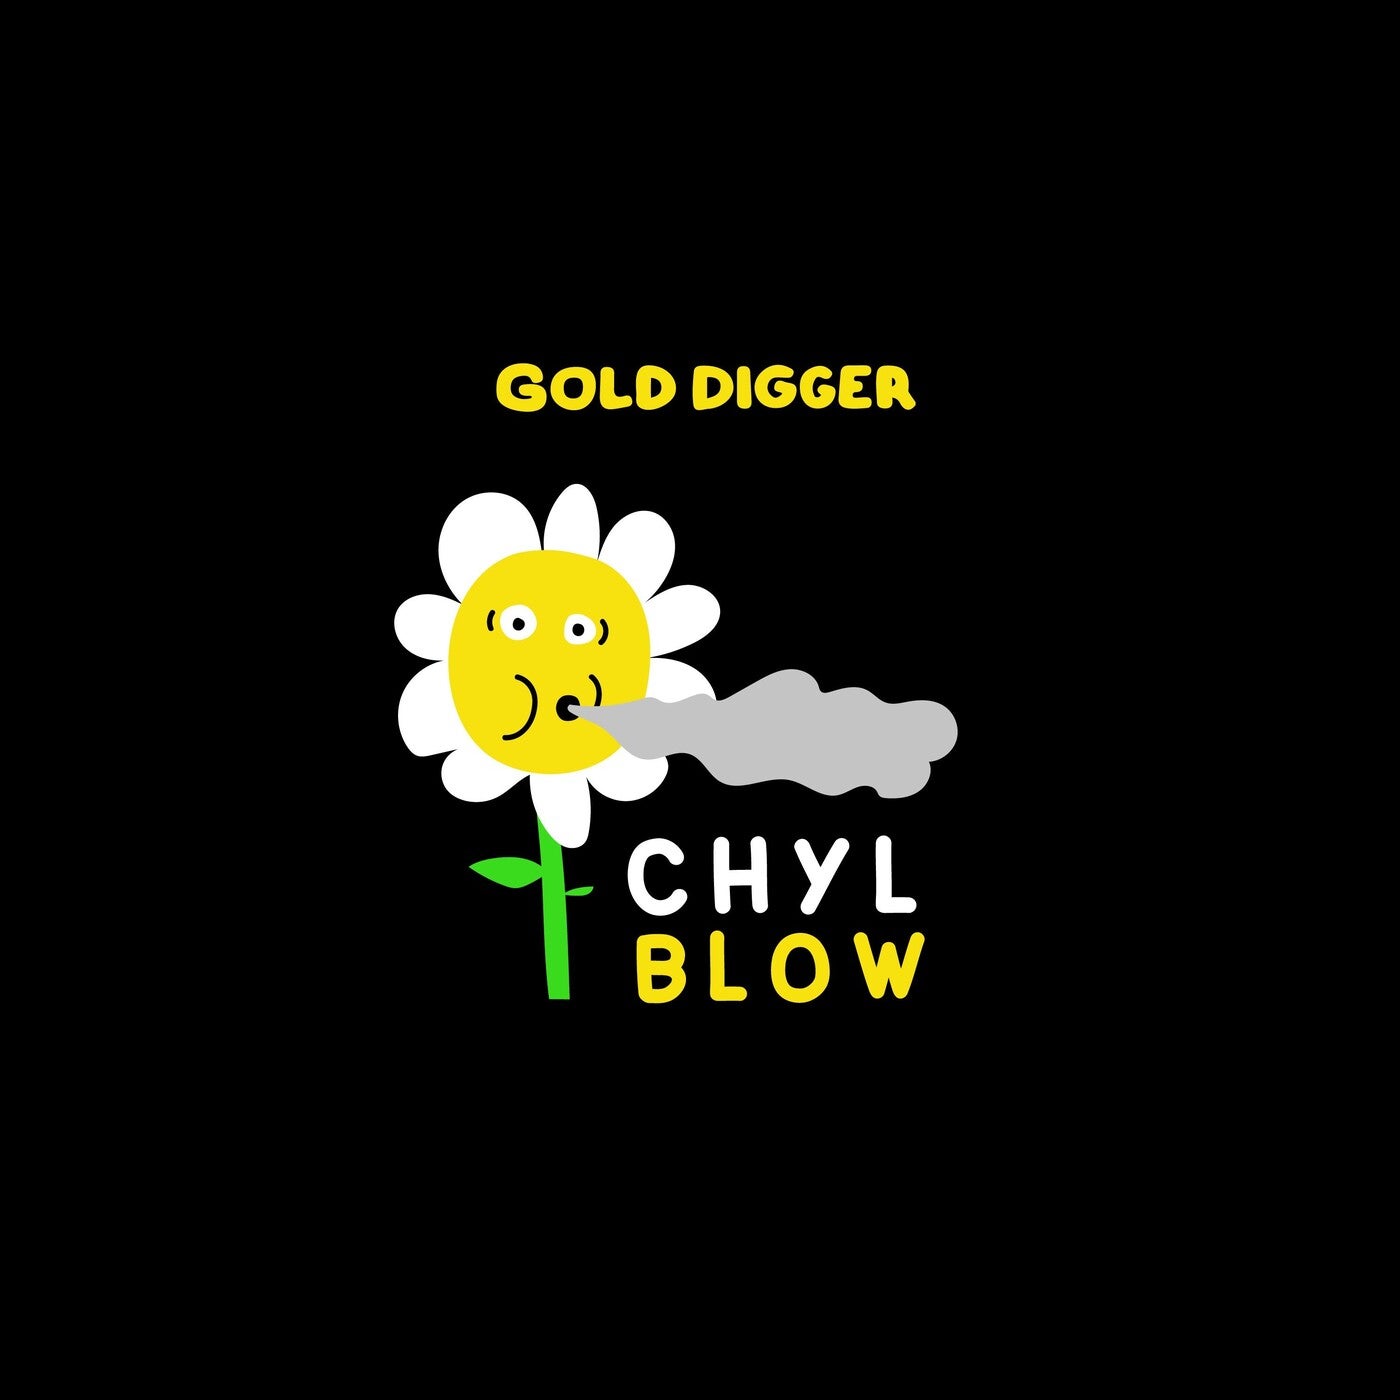 Gold Digger Records